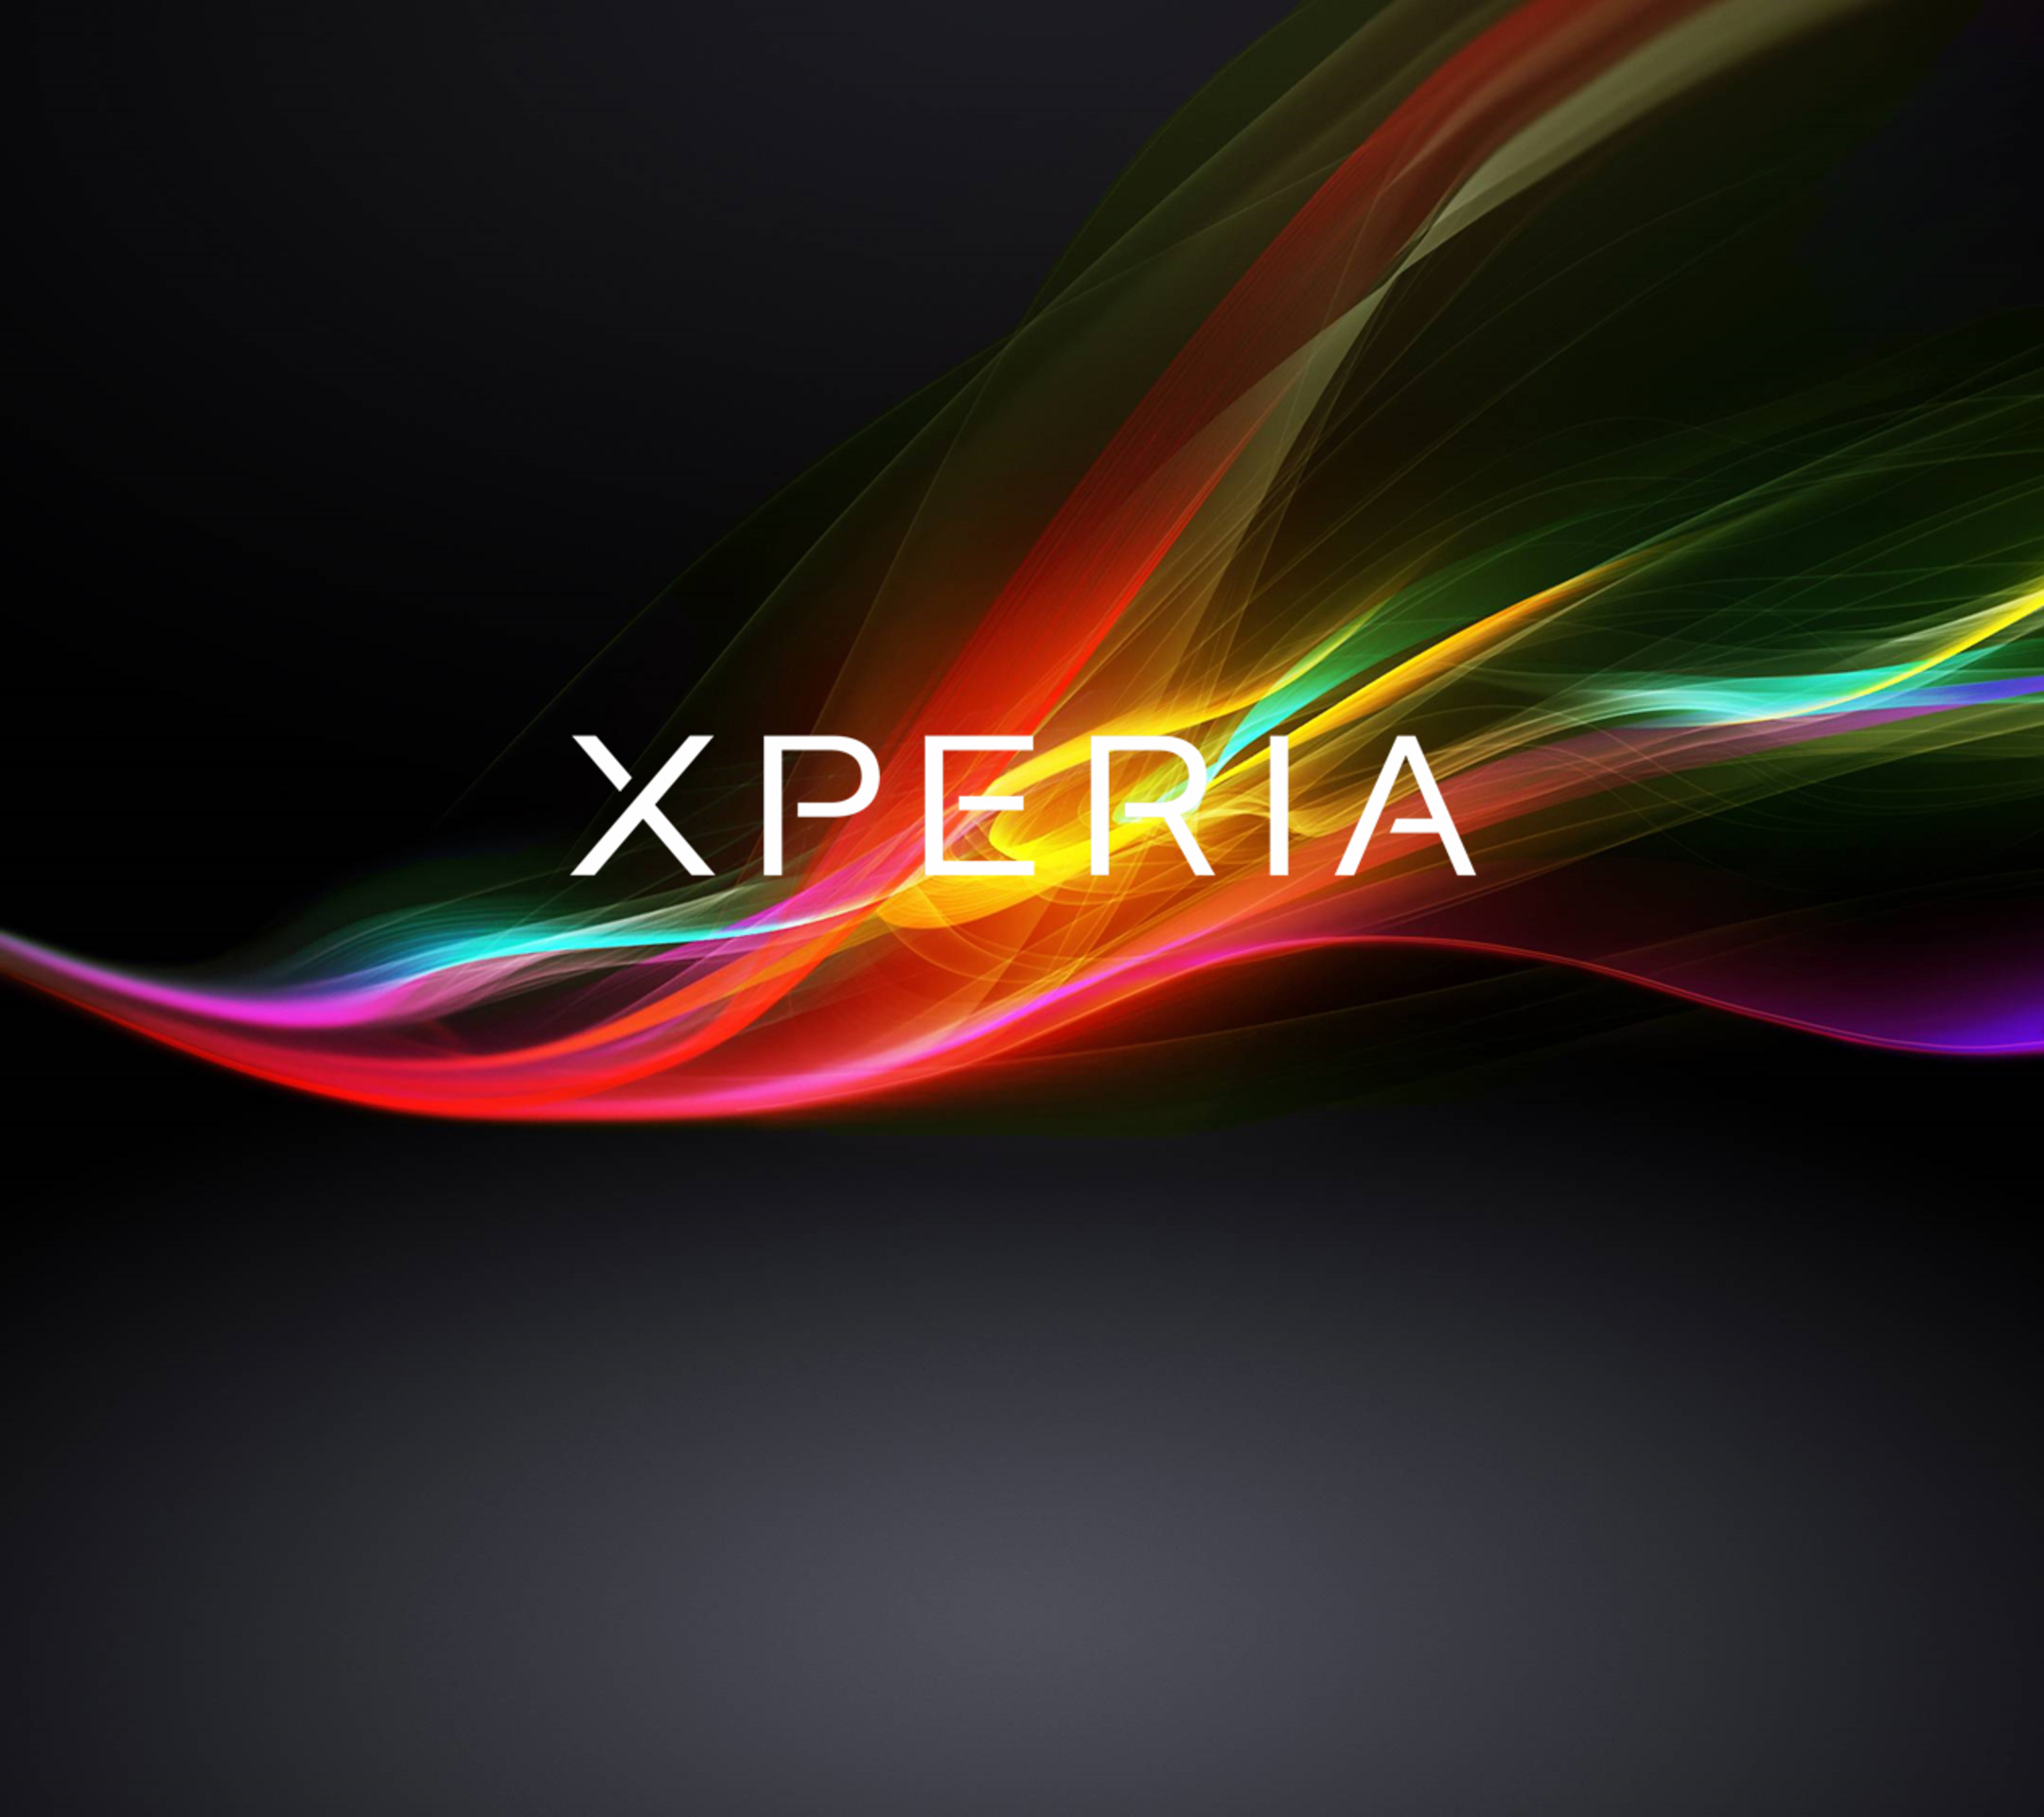 Обои сони. Логотип Sony Xperia. Фоновые рисунки Sony Xperia. Xperia. Обои xperia